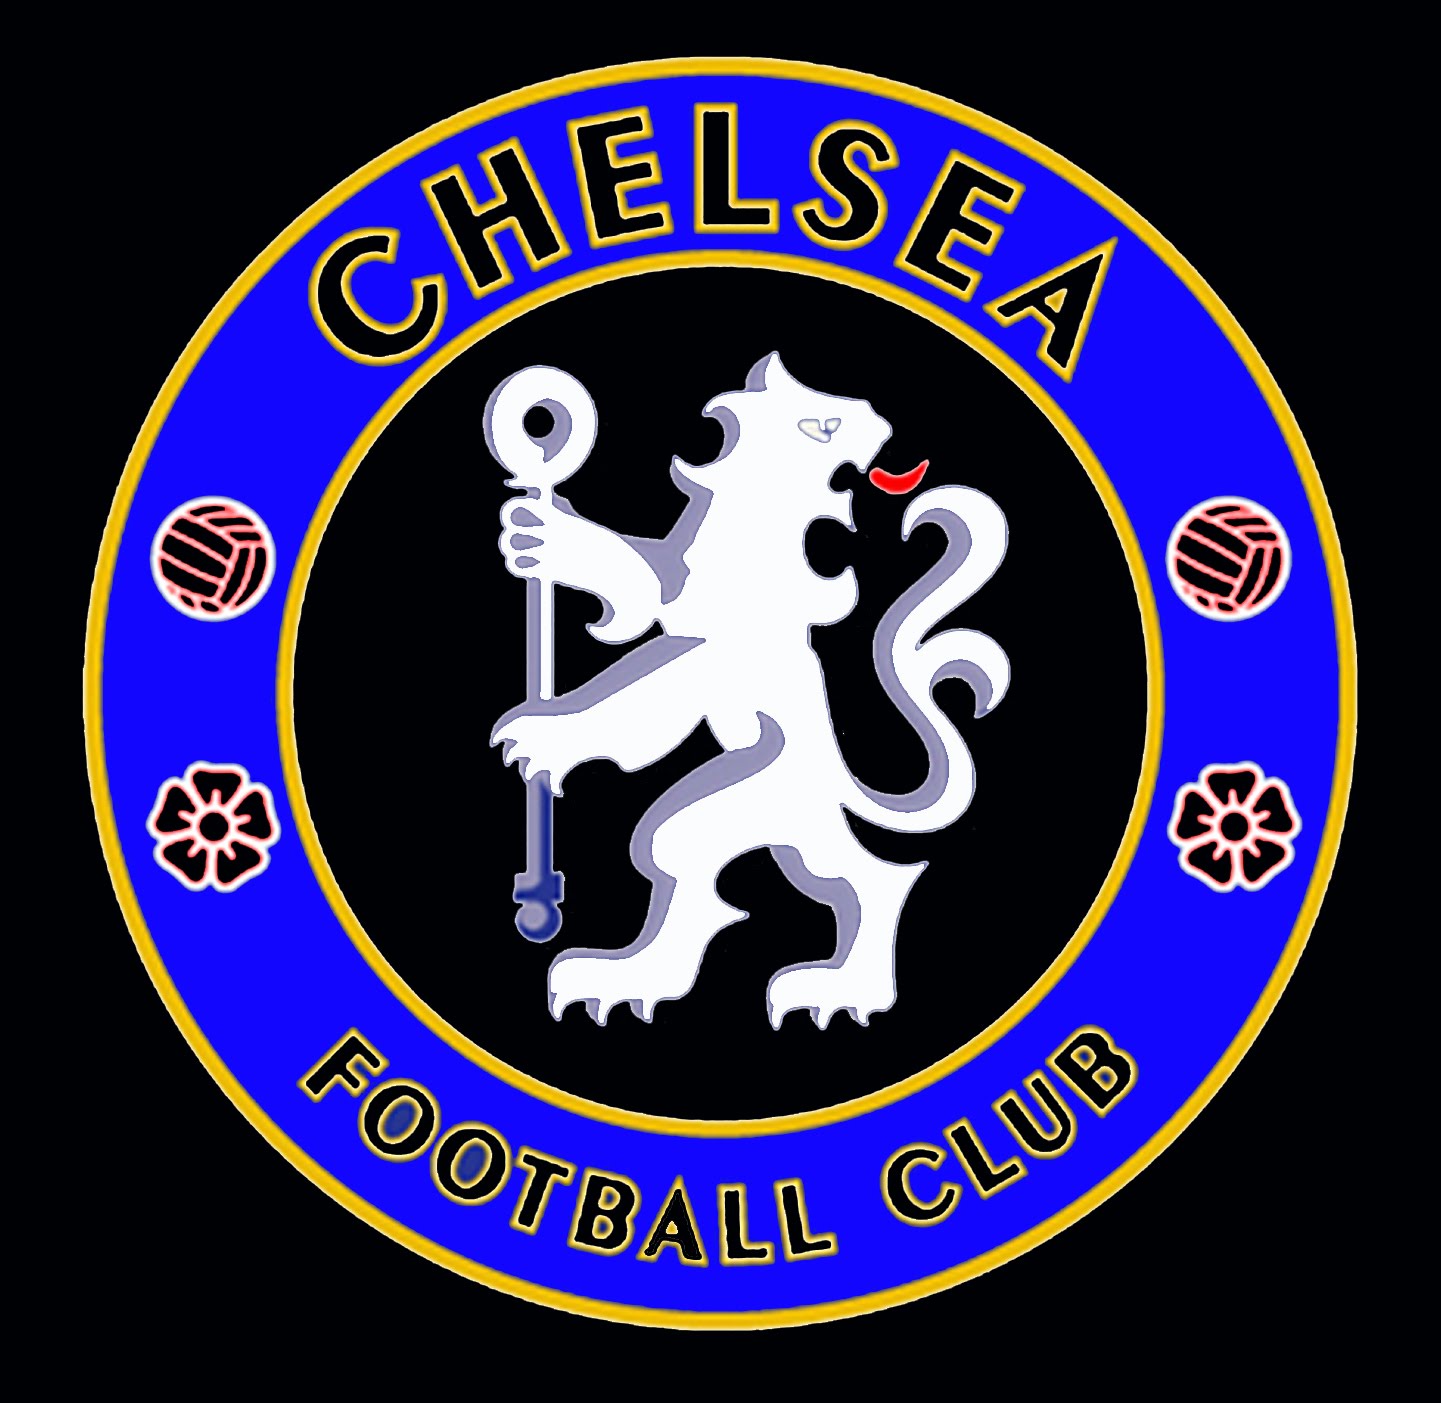 Chelsea FC news